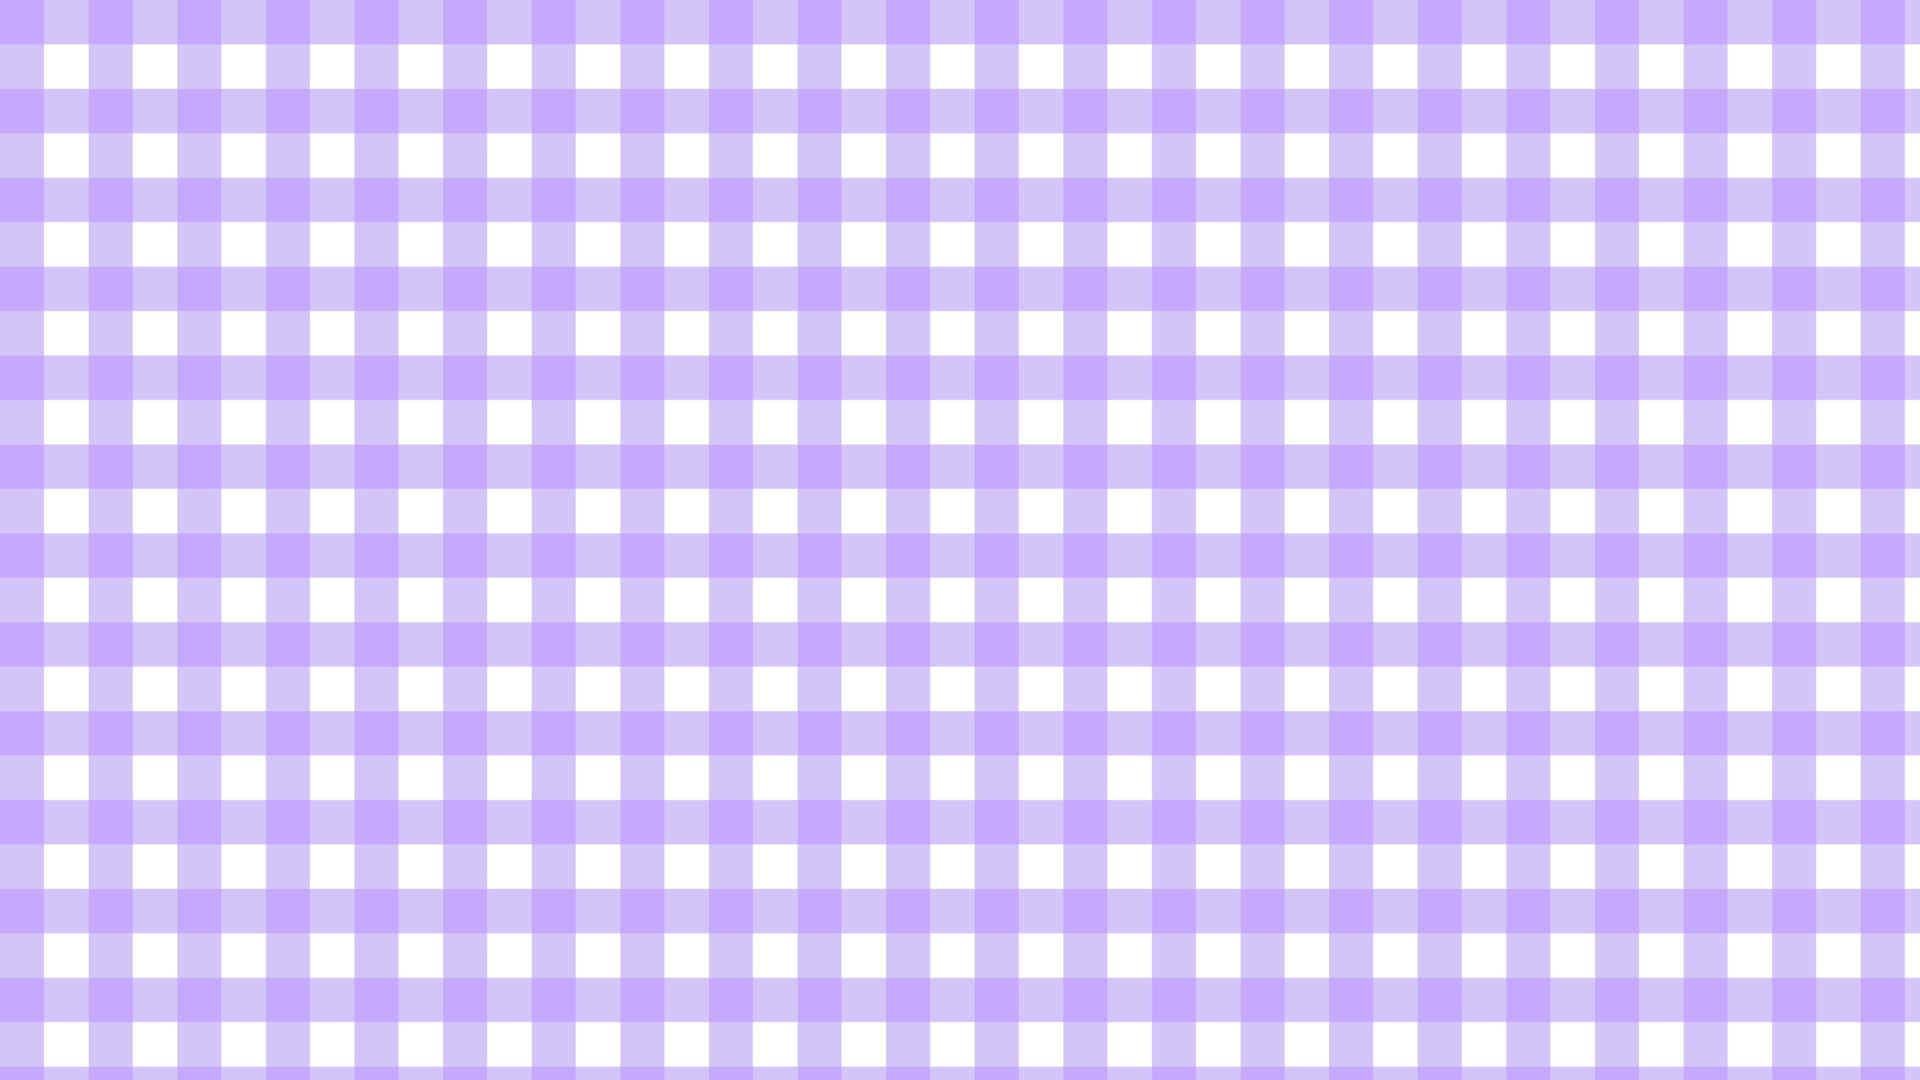 A purple and white checkered pattern - Pastel purple